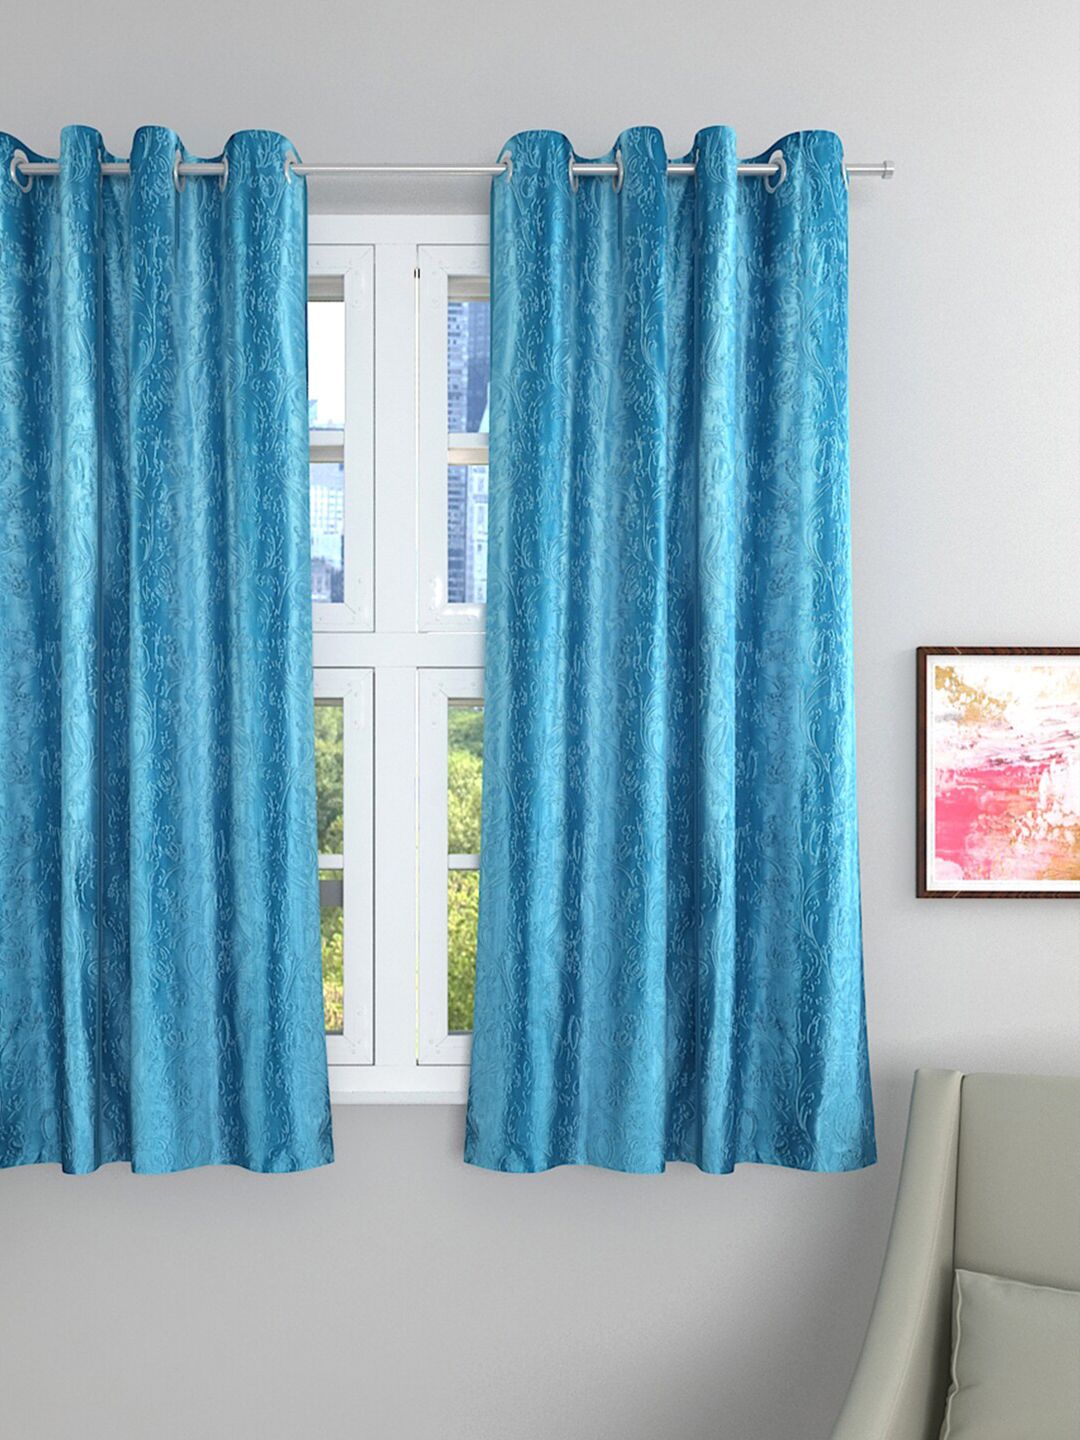 ROMEE Turquoise Blue Single Room Darkening Window Curtain Price in India